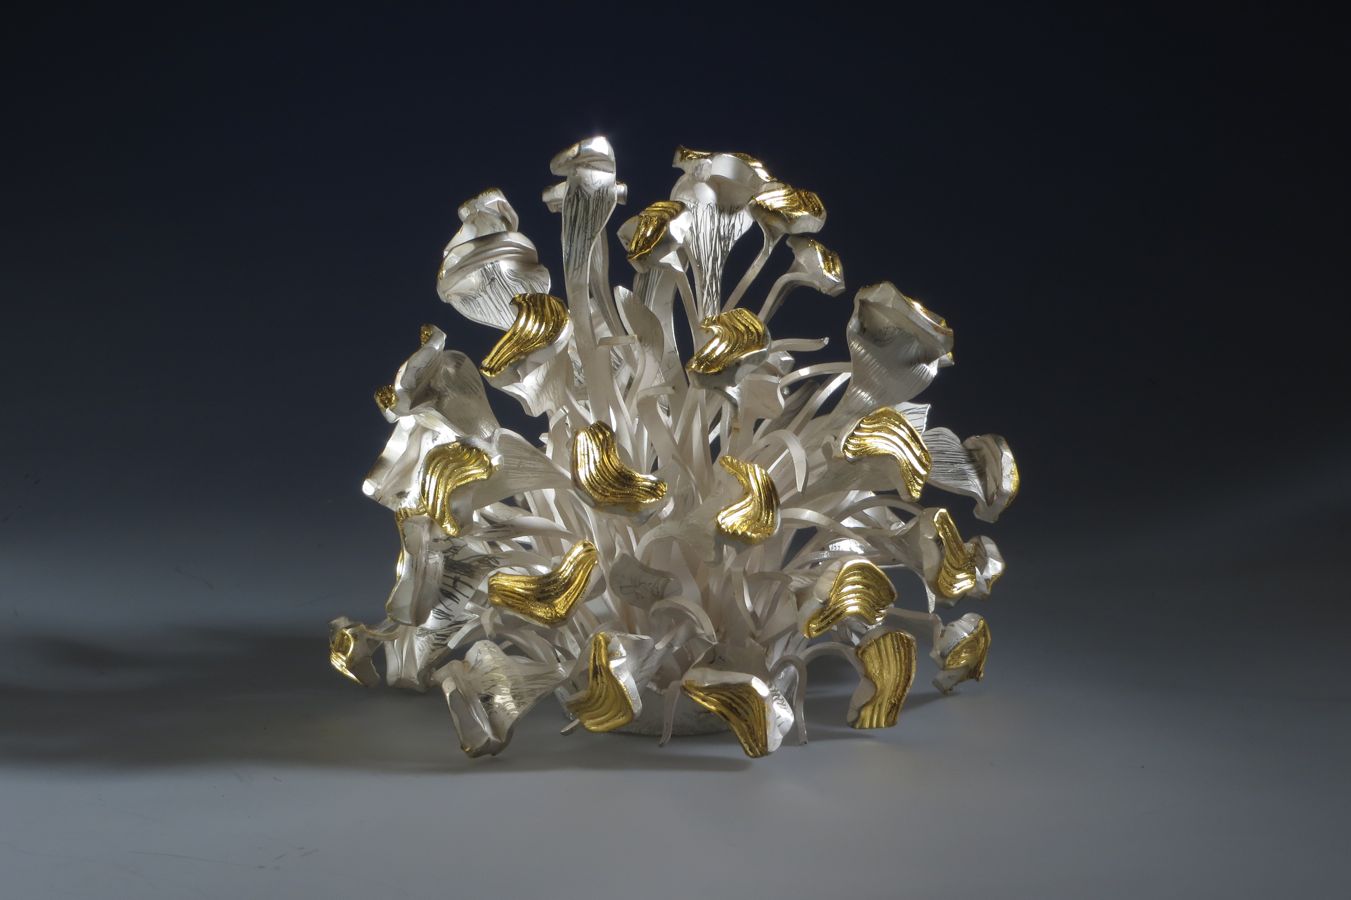 Piece -- materials: silver, gold leaf; dimensions: diameter 13, h 12 cm;